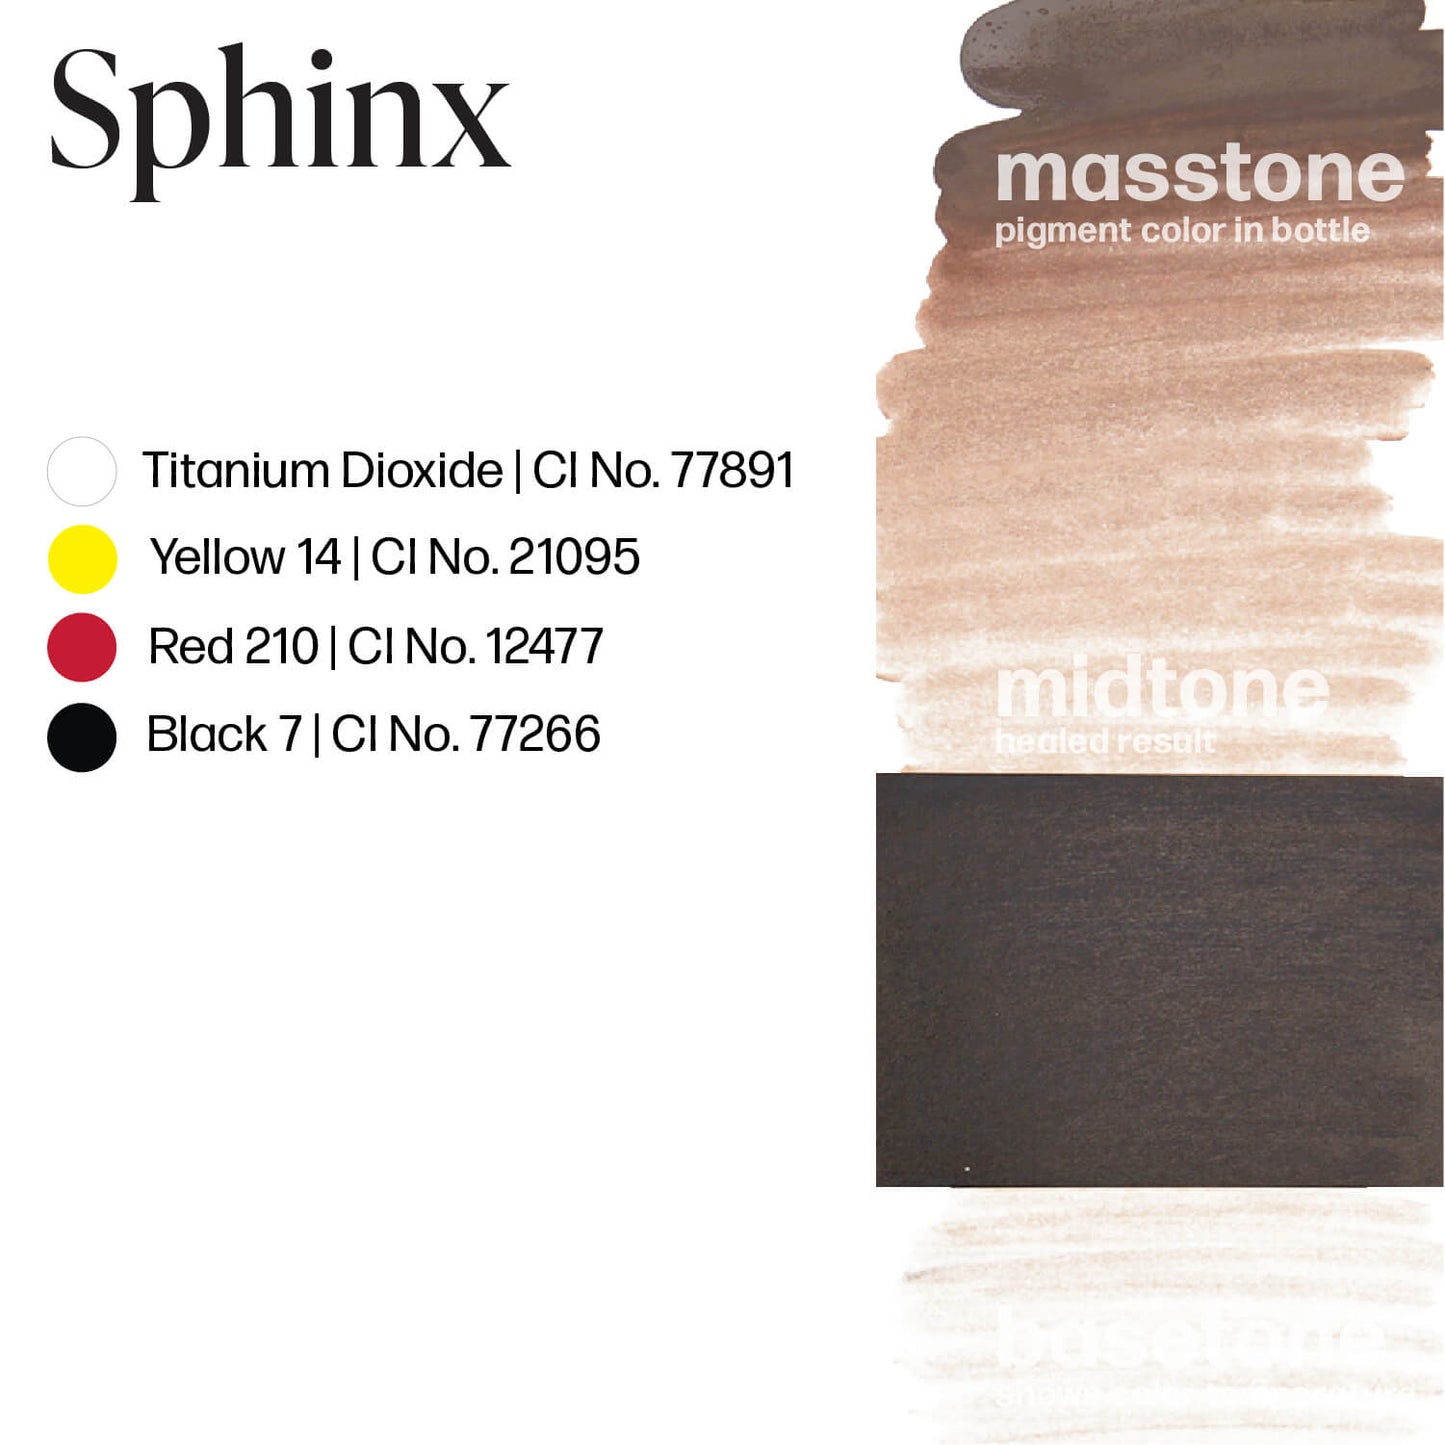 Perma Blend Sphinx Brow Ink Drawdown Masstone Midtone Basetone